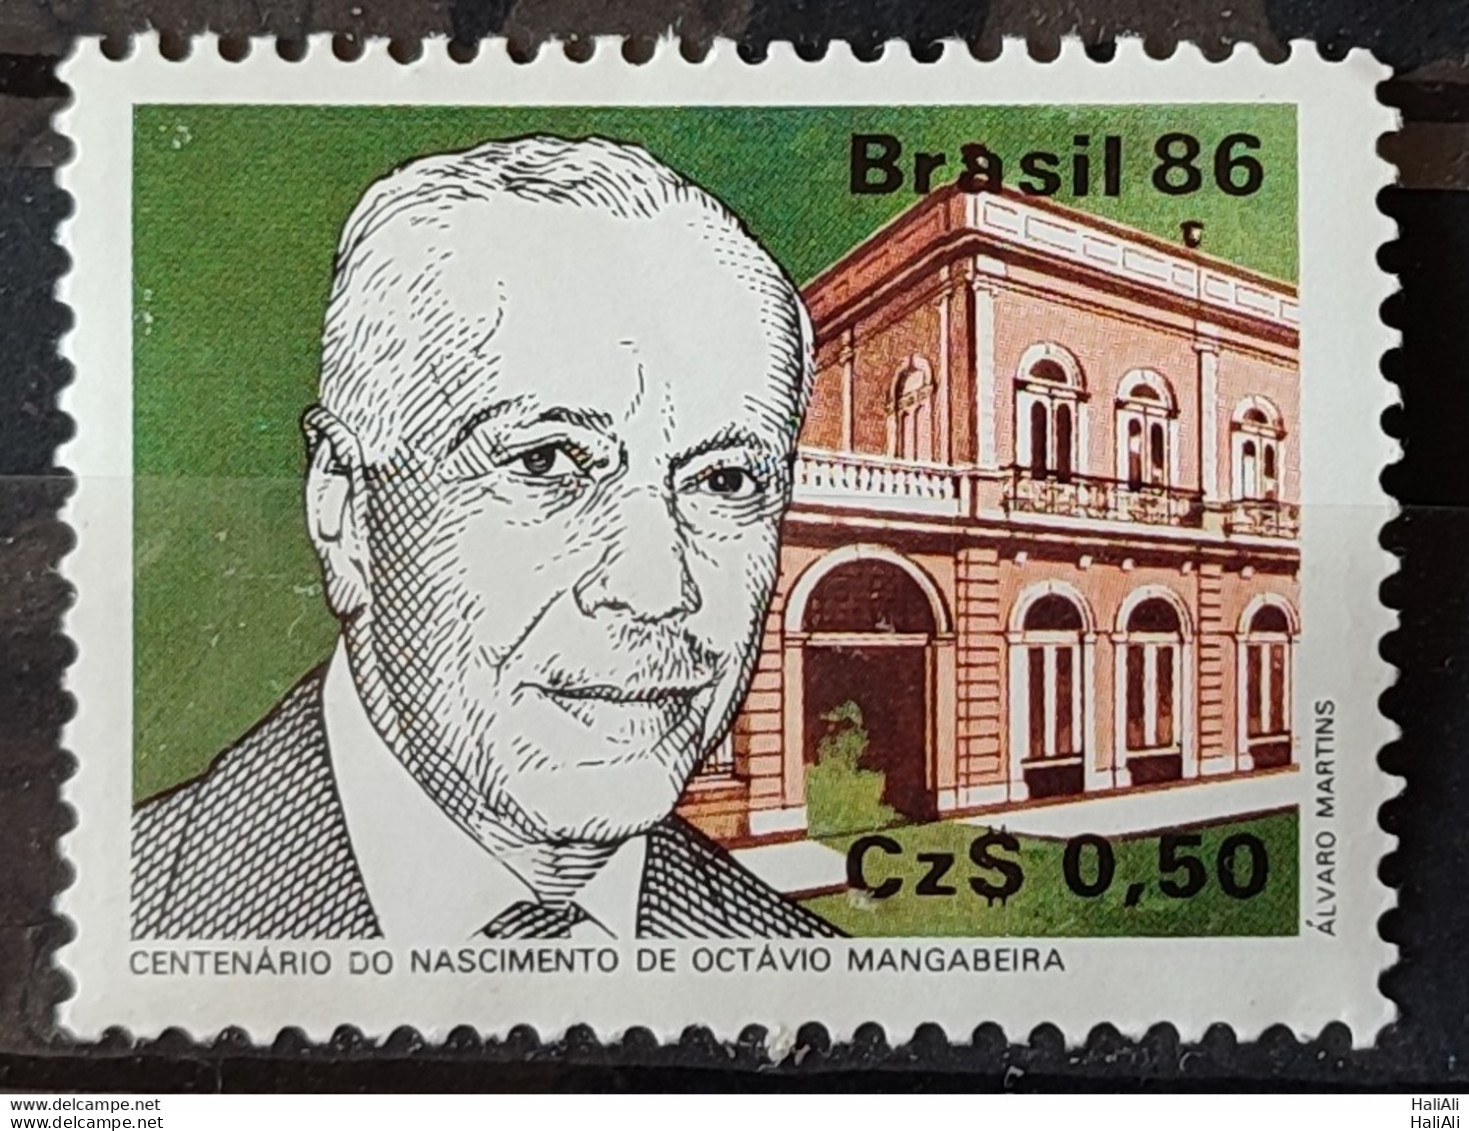 C 1519 Brazil Stamp Octavio Mangabeira Politics 1986.jpg - Nuevos